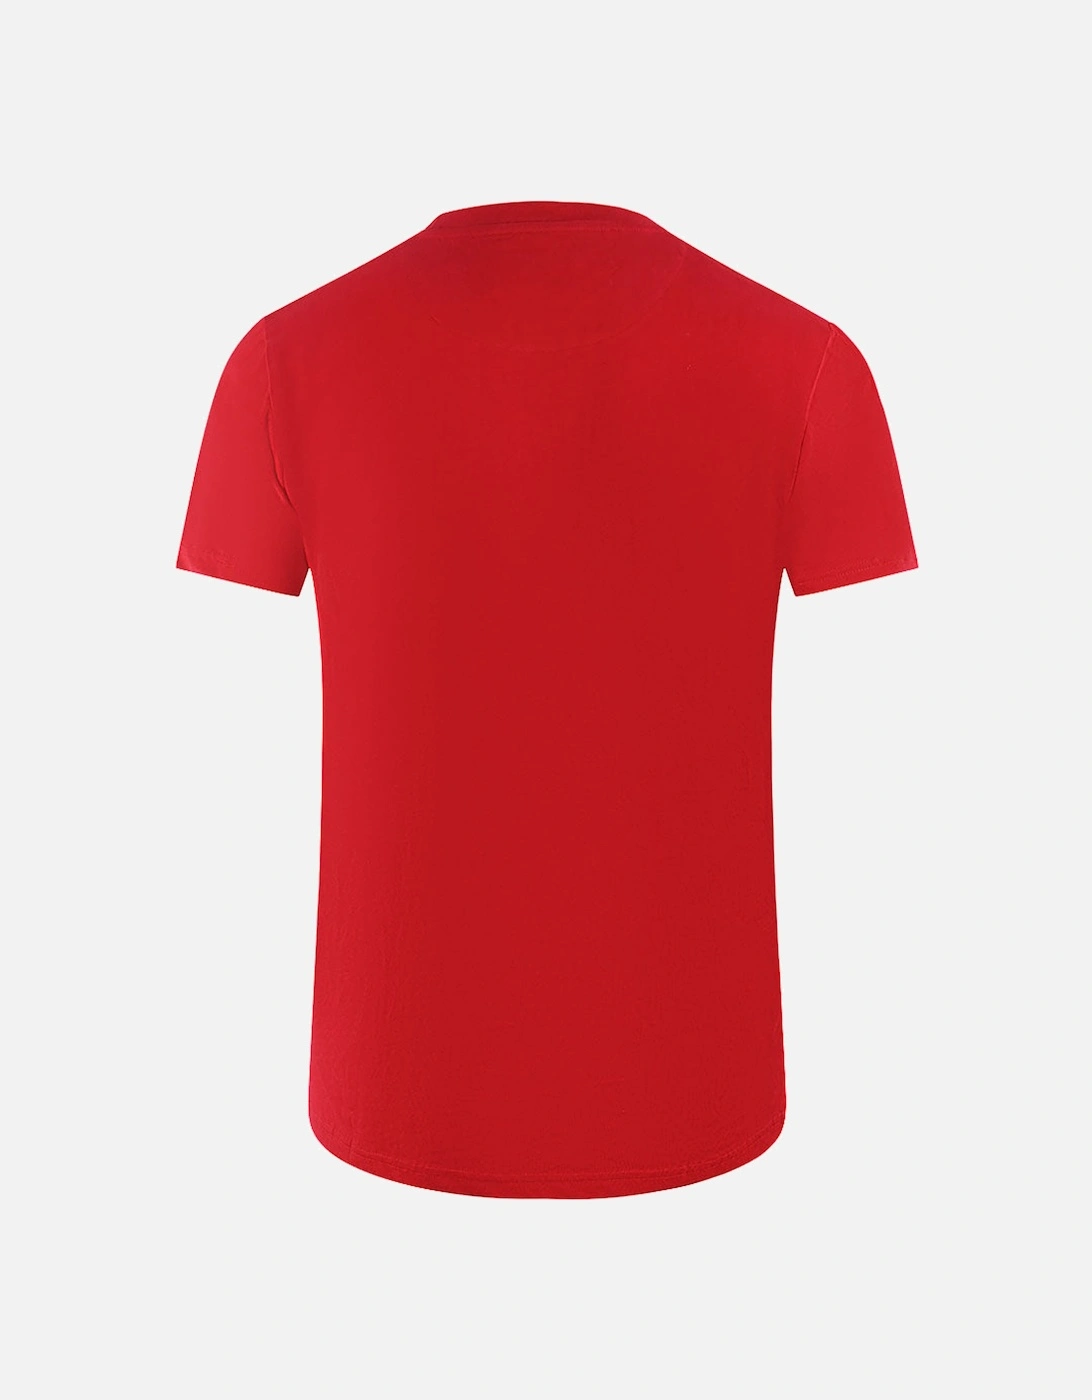 London 1851 Split Logo Red T-Shirt